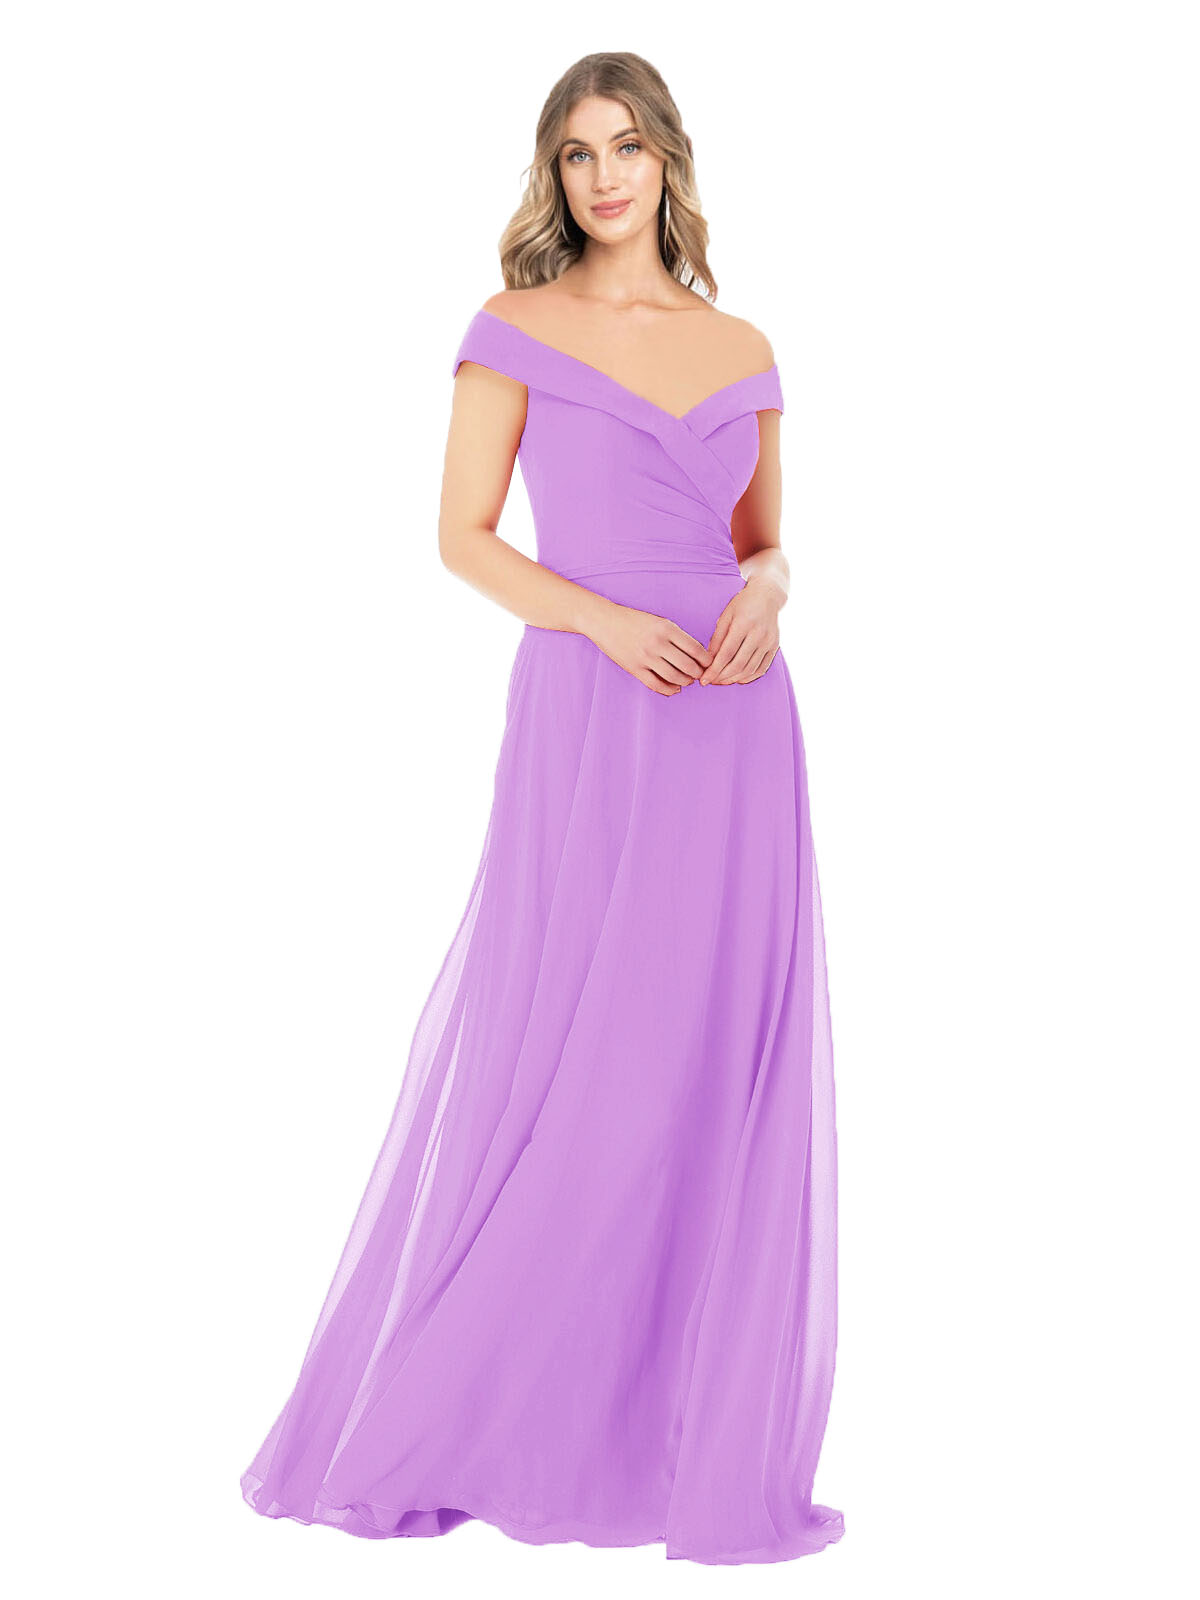 Violet A-Line Off the Shoulder Sleeveless Long Bridesmaid Dress Alva